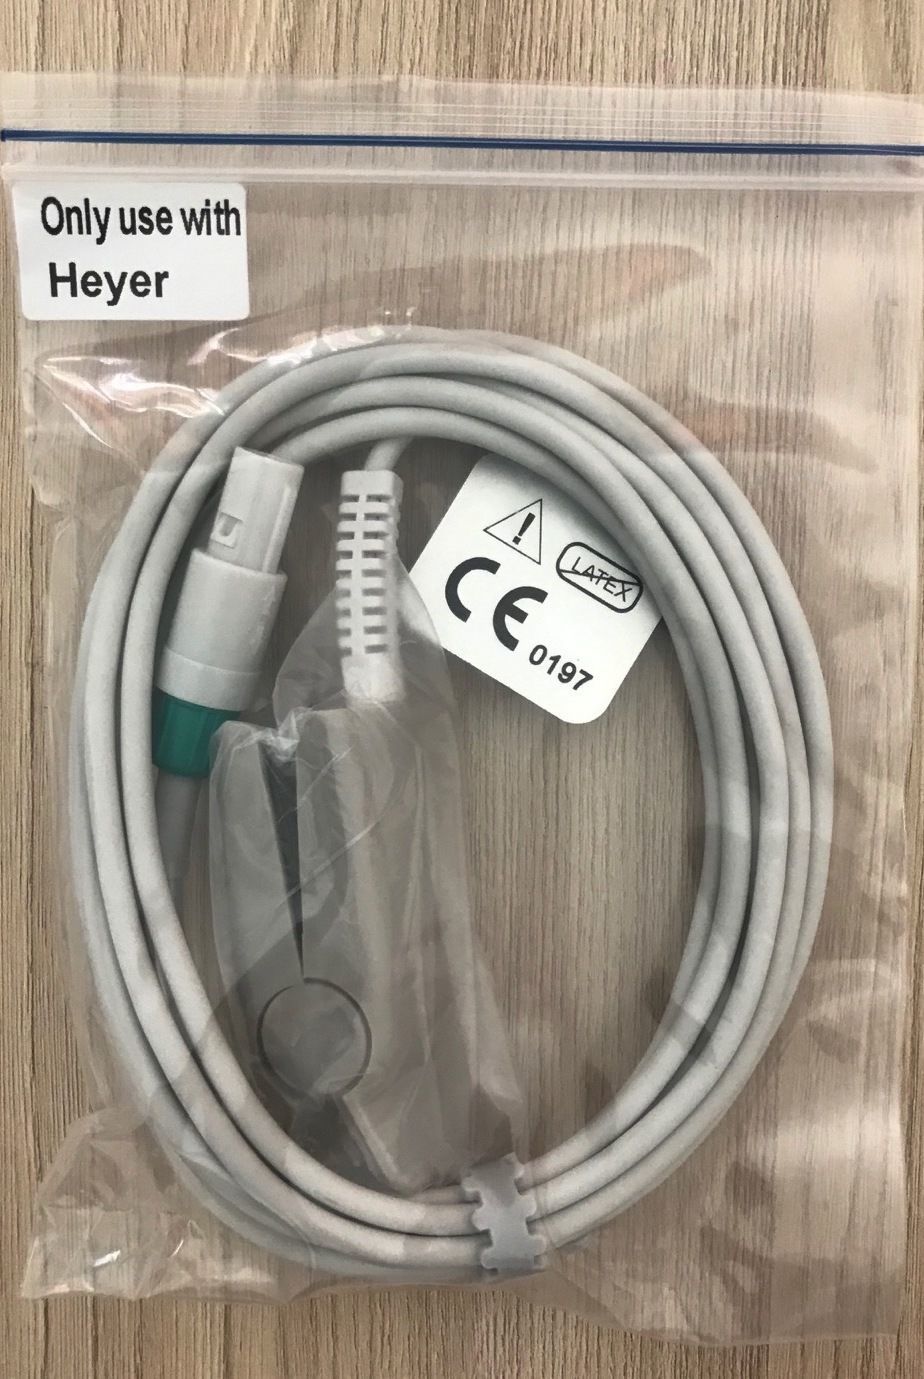 Spo2 Adult cable for Heyer Scalis_สายออกซิเจนแซทโพรบสำหรับเครื่อง Heyer รุ่น Scalis